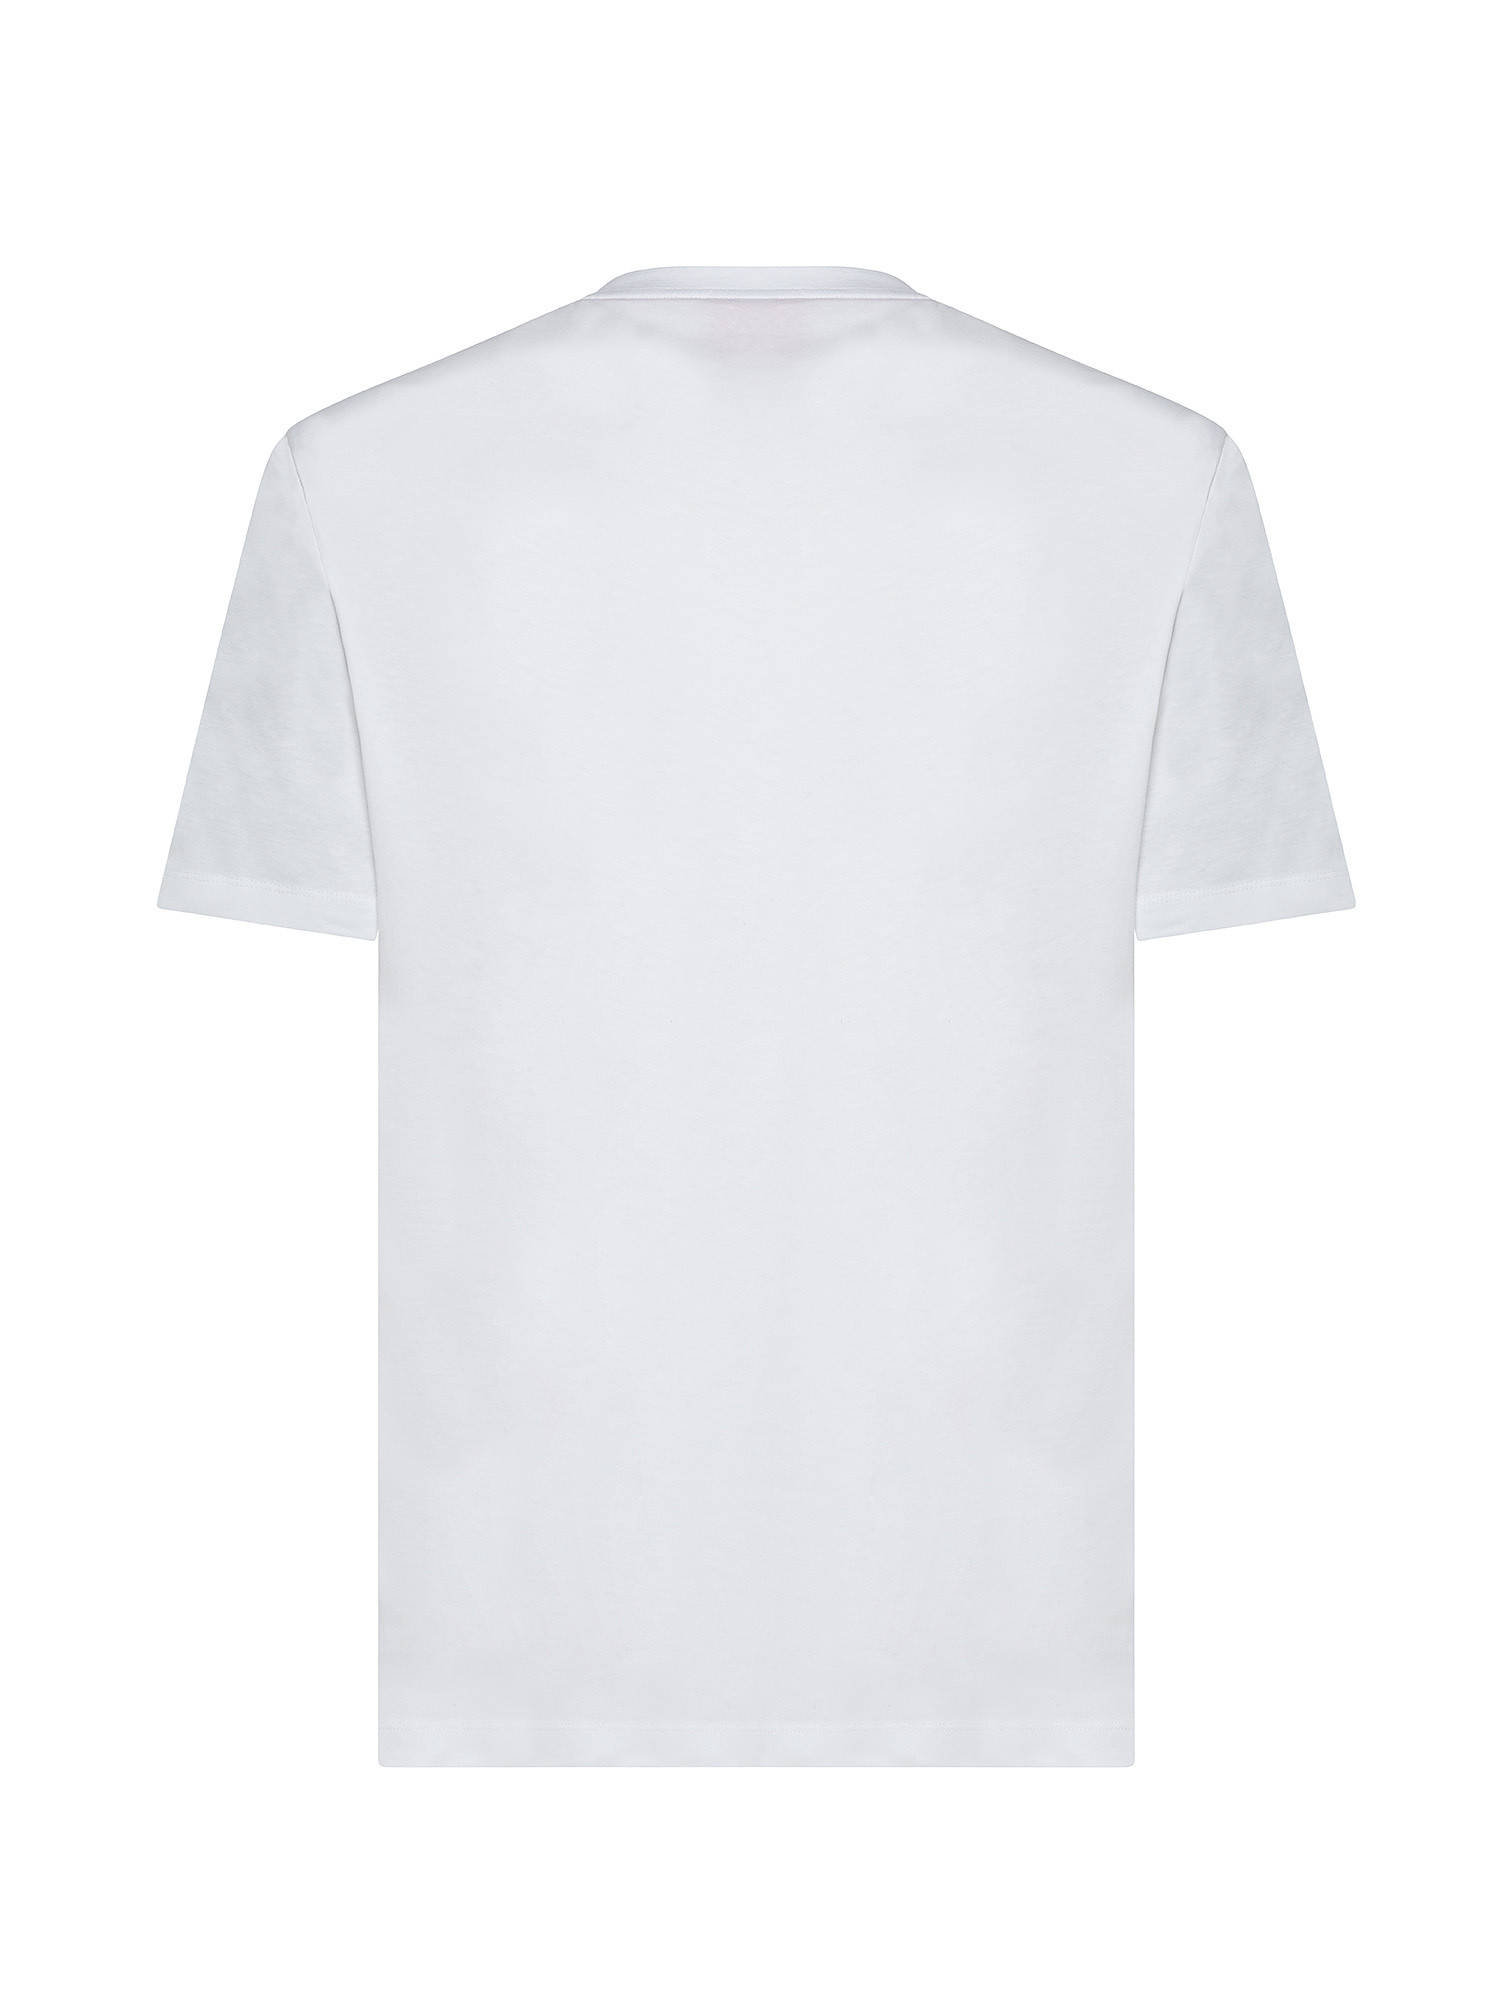 Hugo - Graphic print cotton t-shirt, White, large image number 1